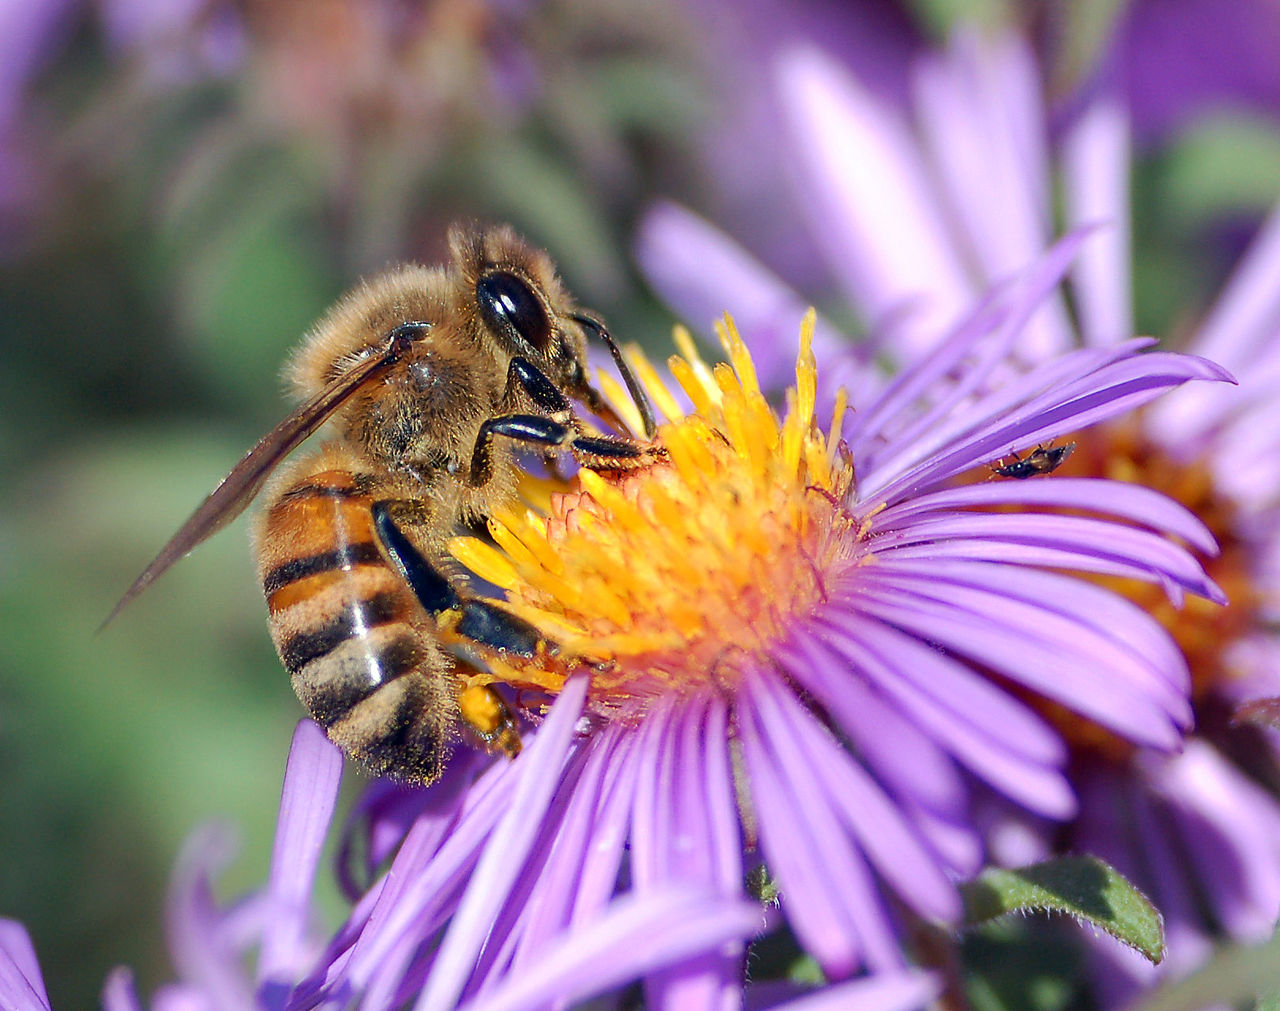 An European honey bee (Apis mellifera) extracts nectar from an Aster flower using its proboscis by John Severns